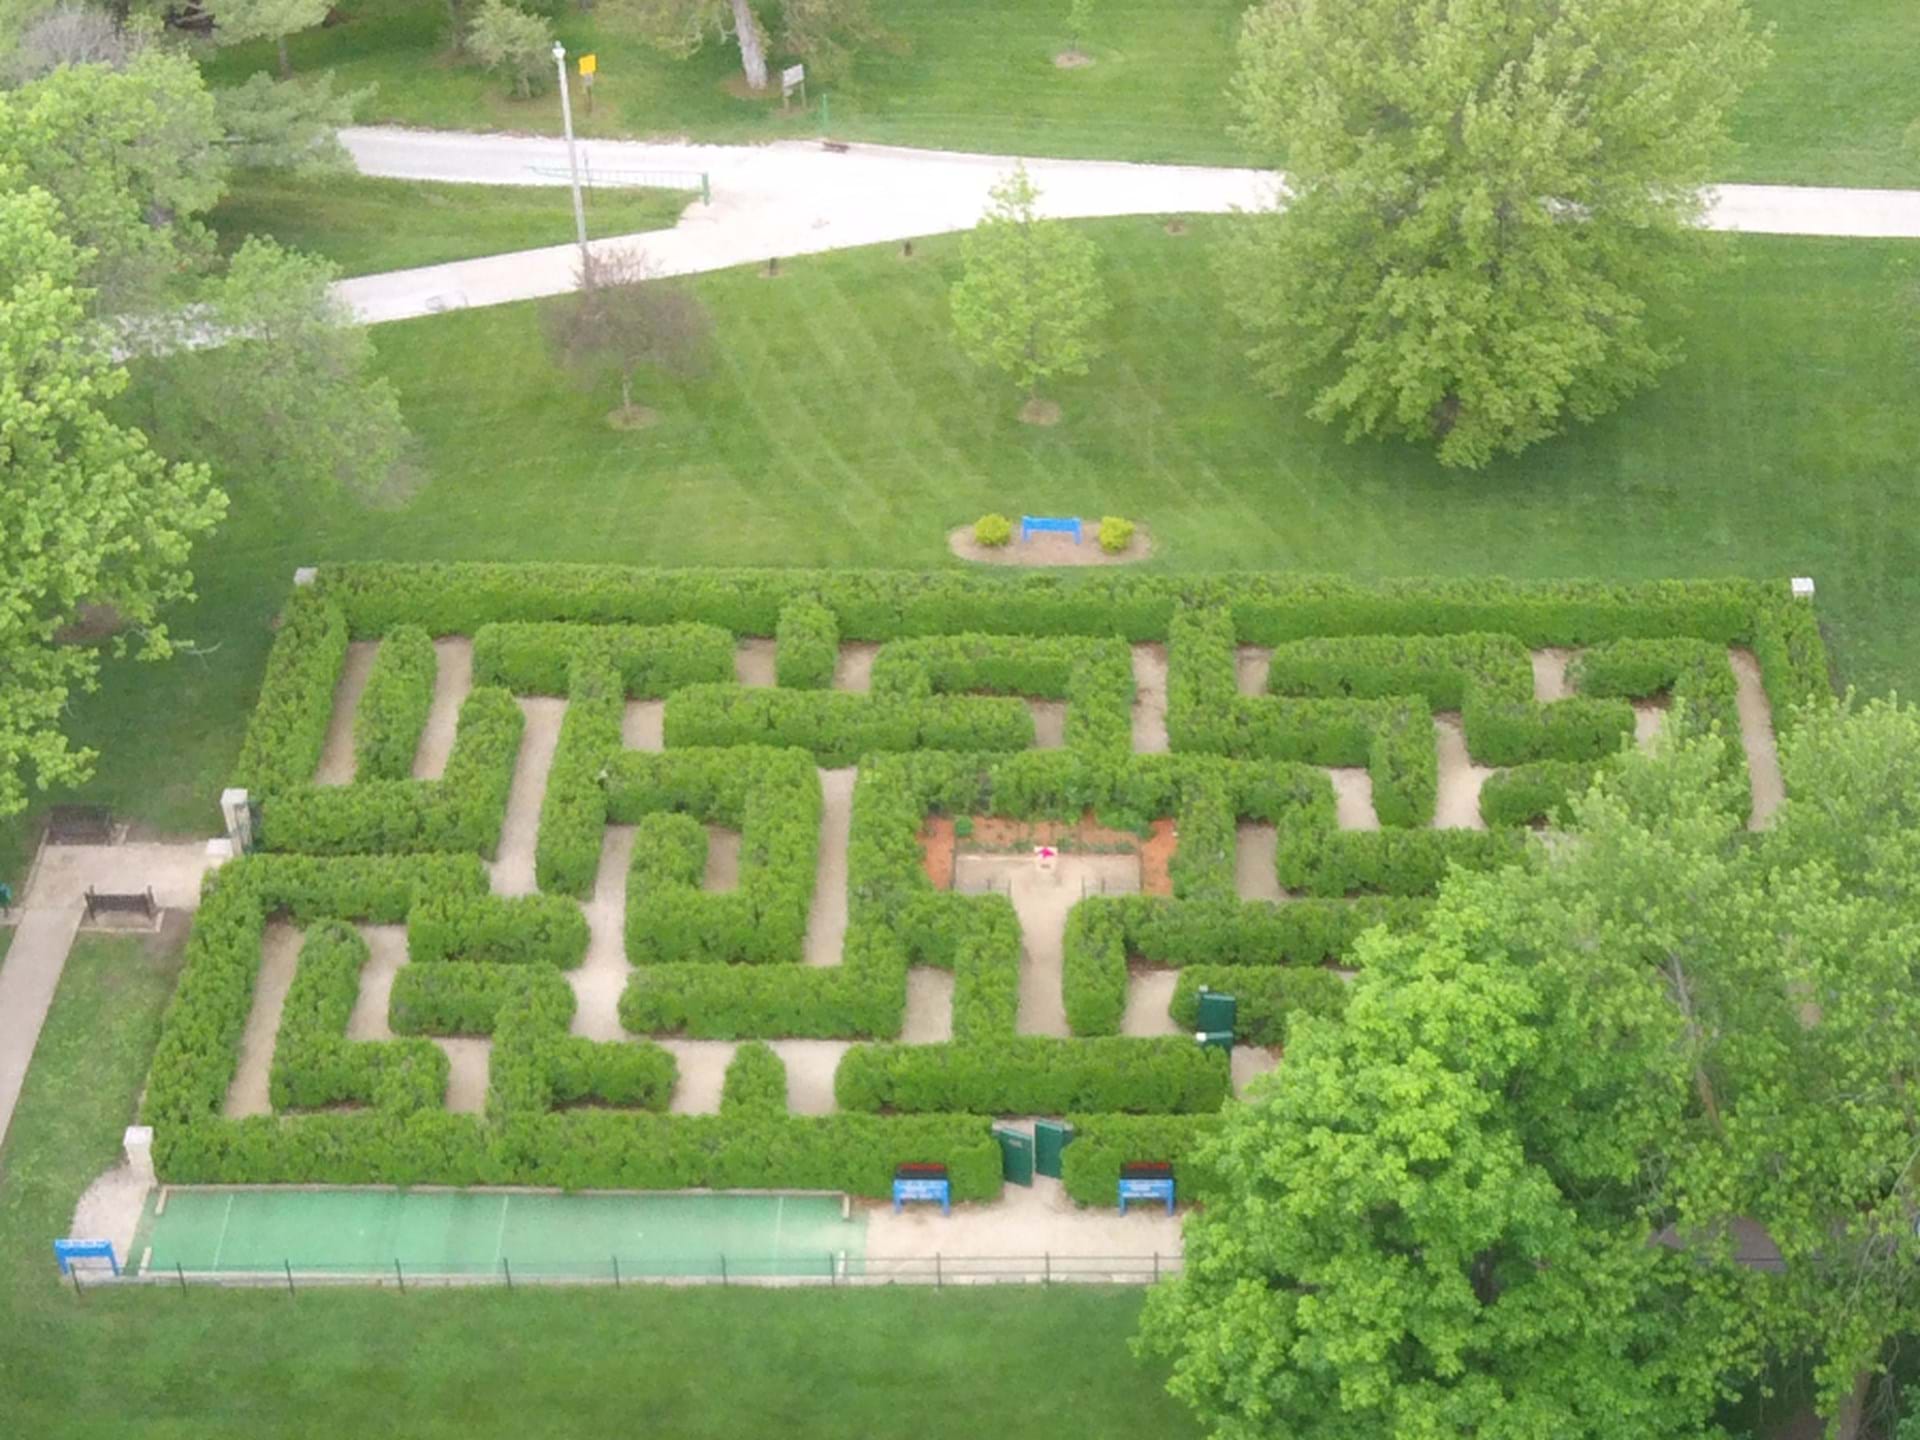 Hedge Maze at Winterset City Park